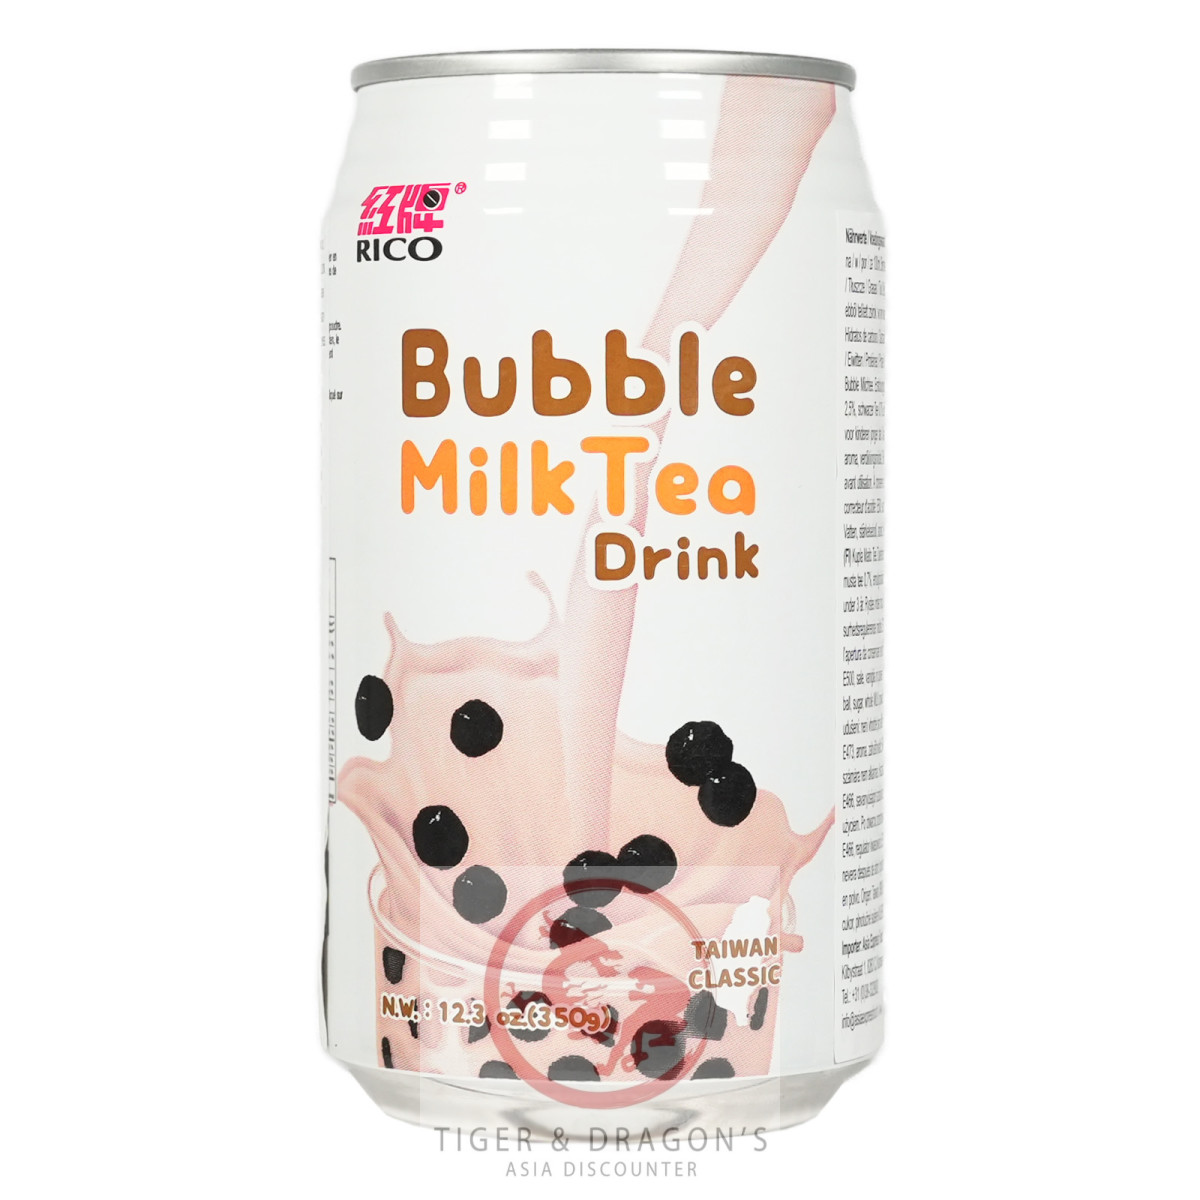 Rico Bubble Tea Milk Drink 350g zzgl. 0,25€ Pfand